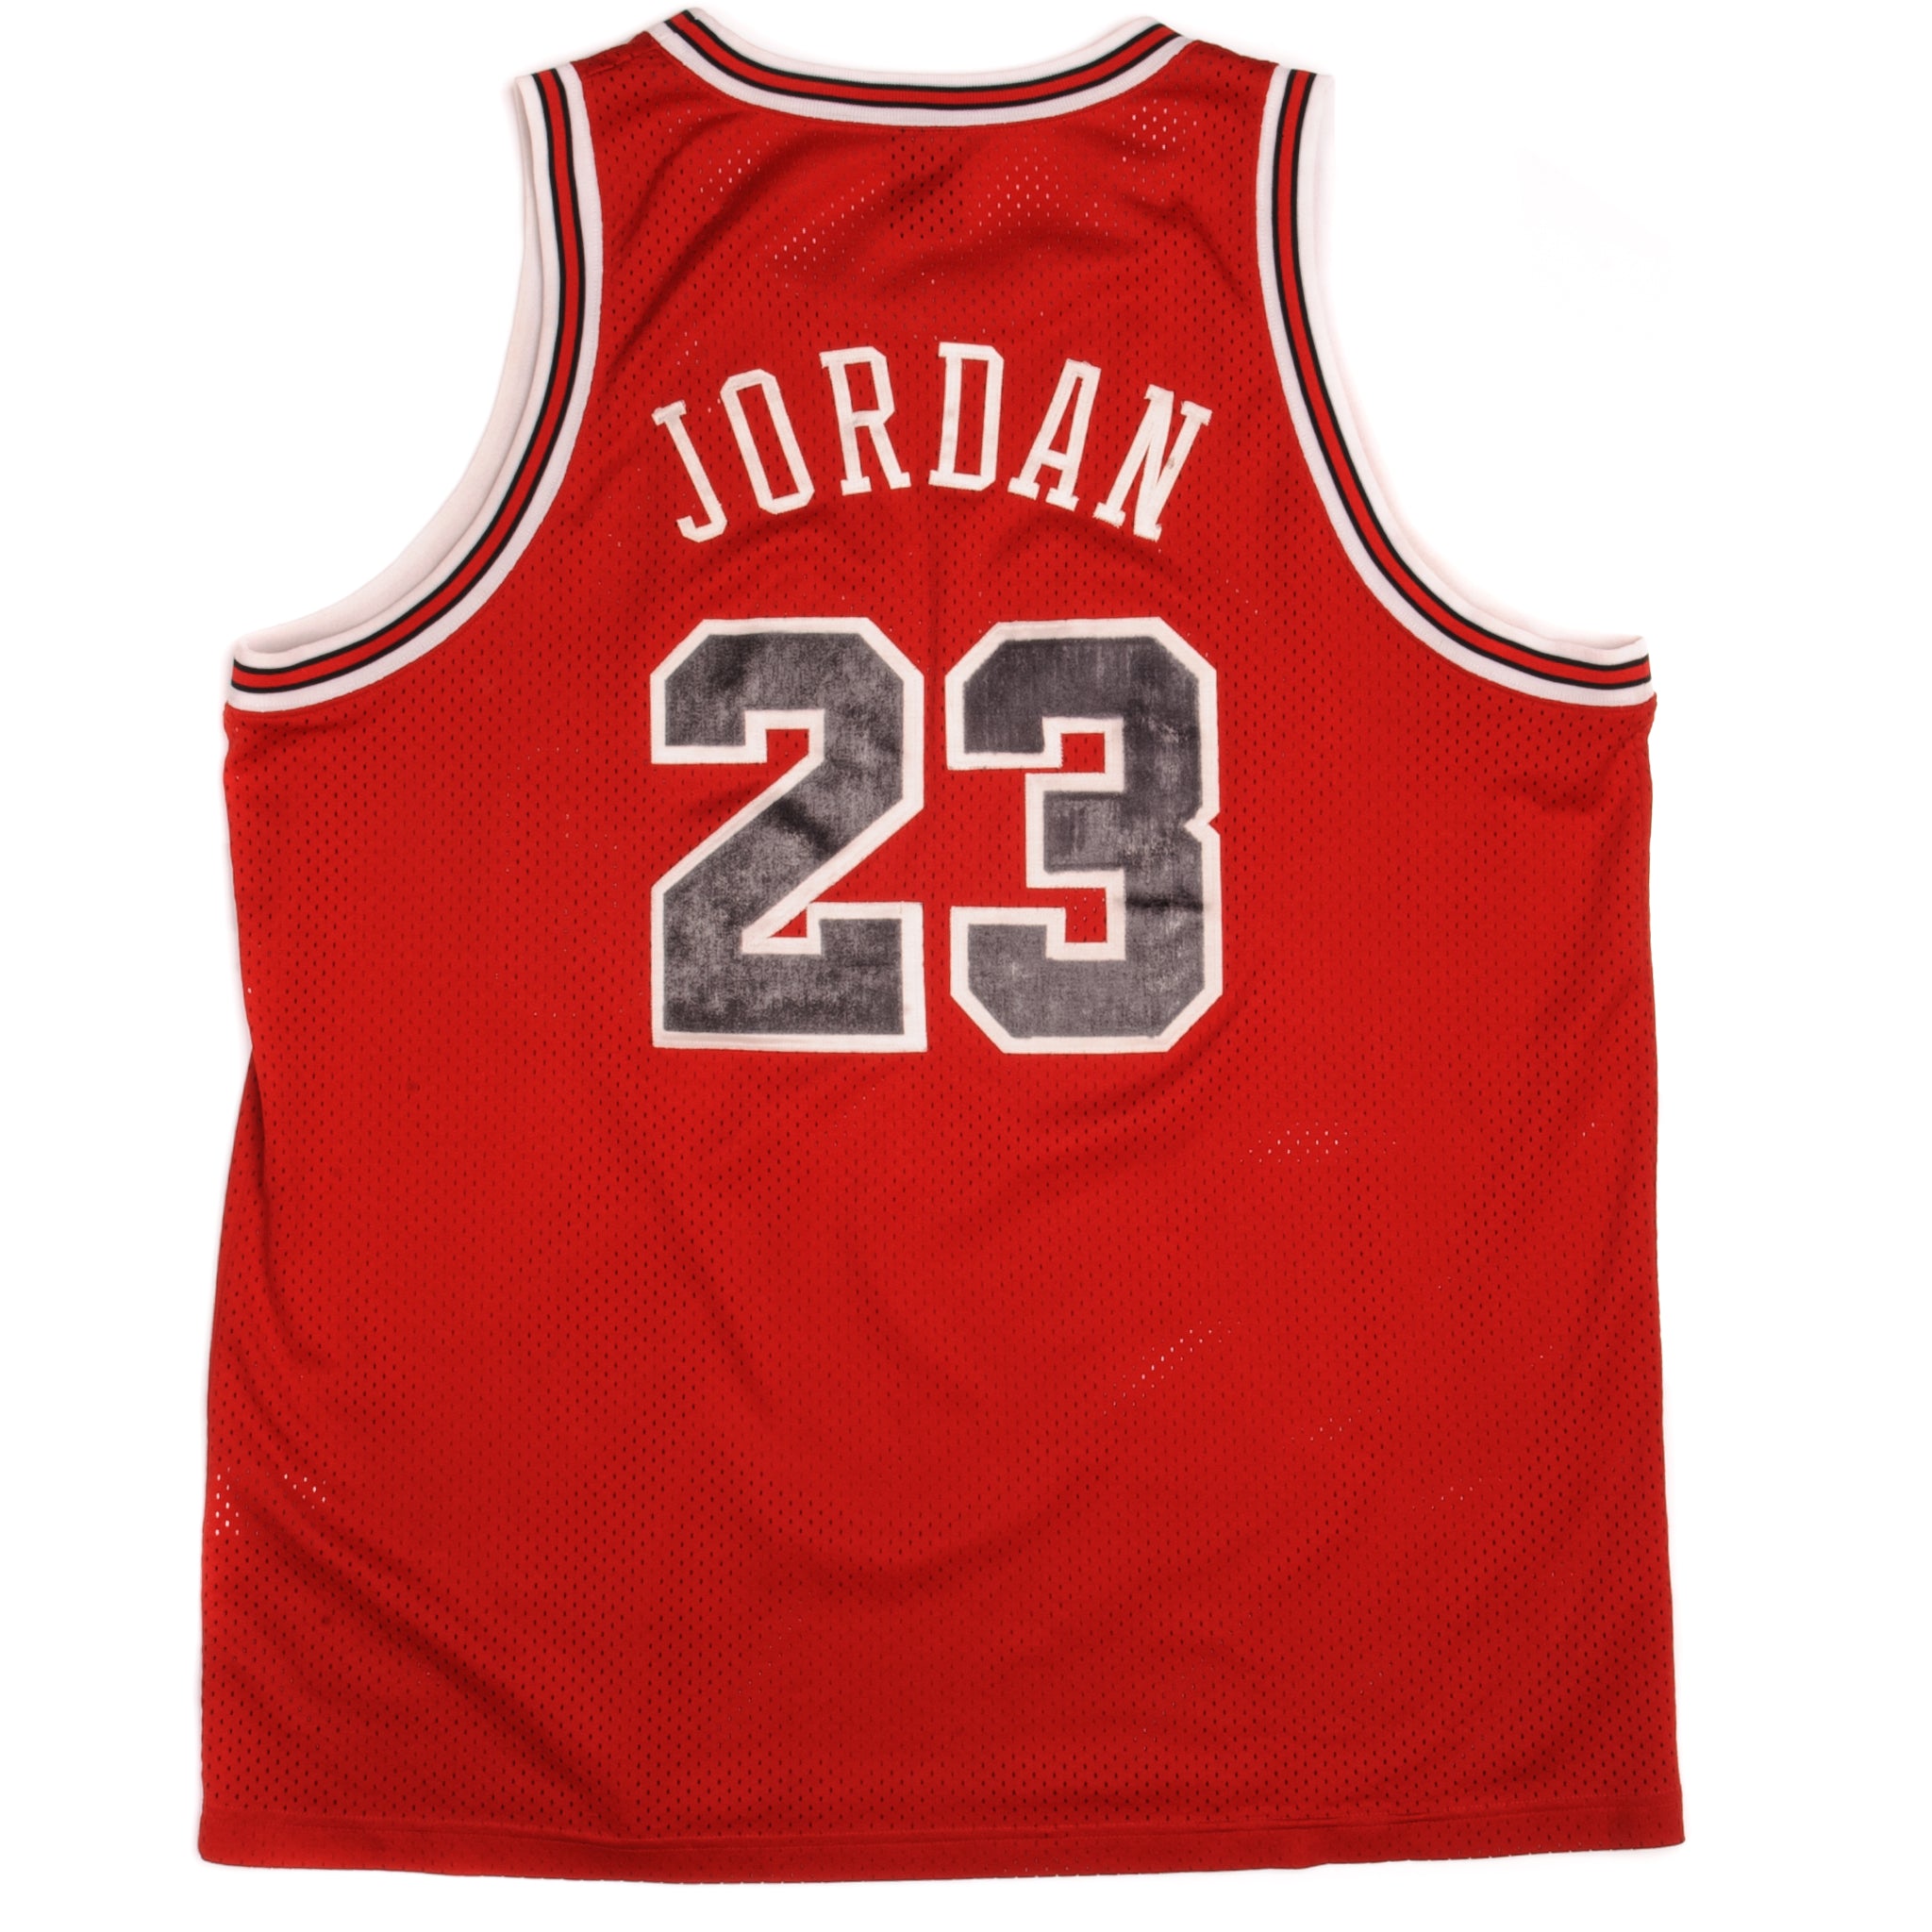 1984 Chicago Bulls Pinstripe Jordan Jersey